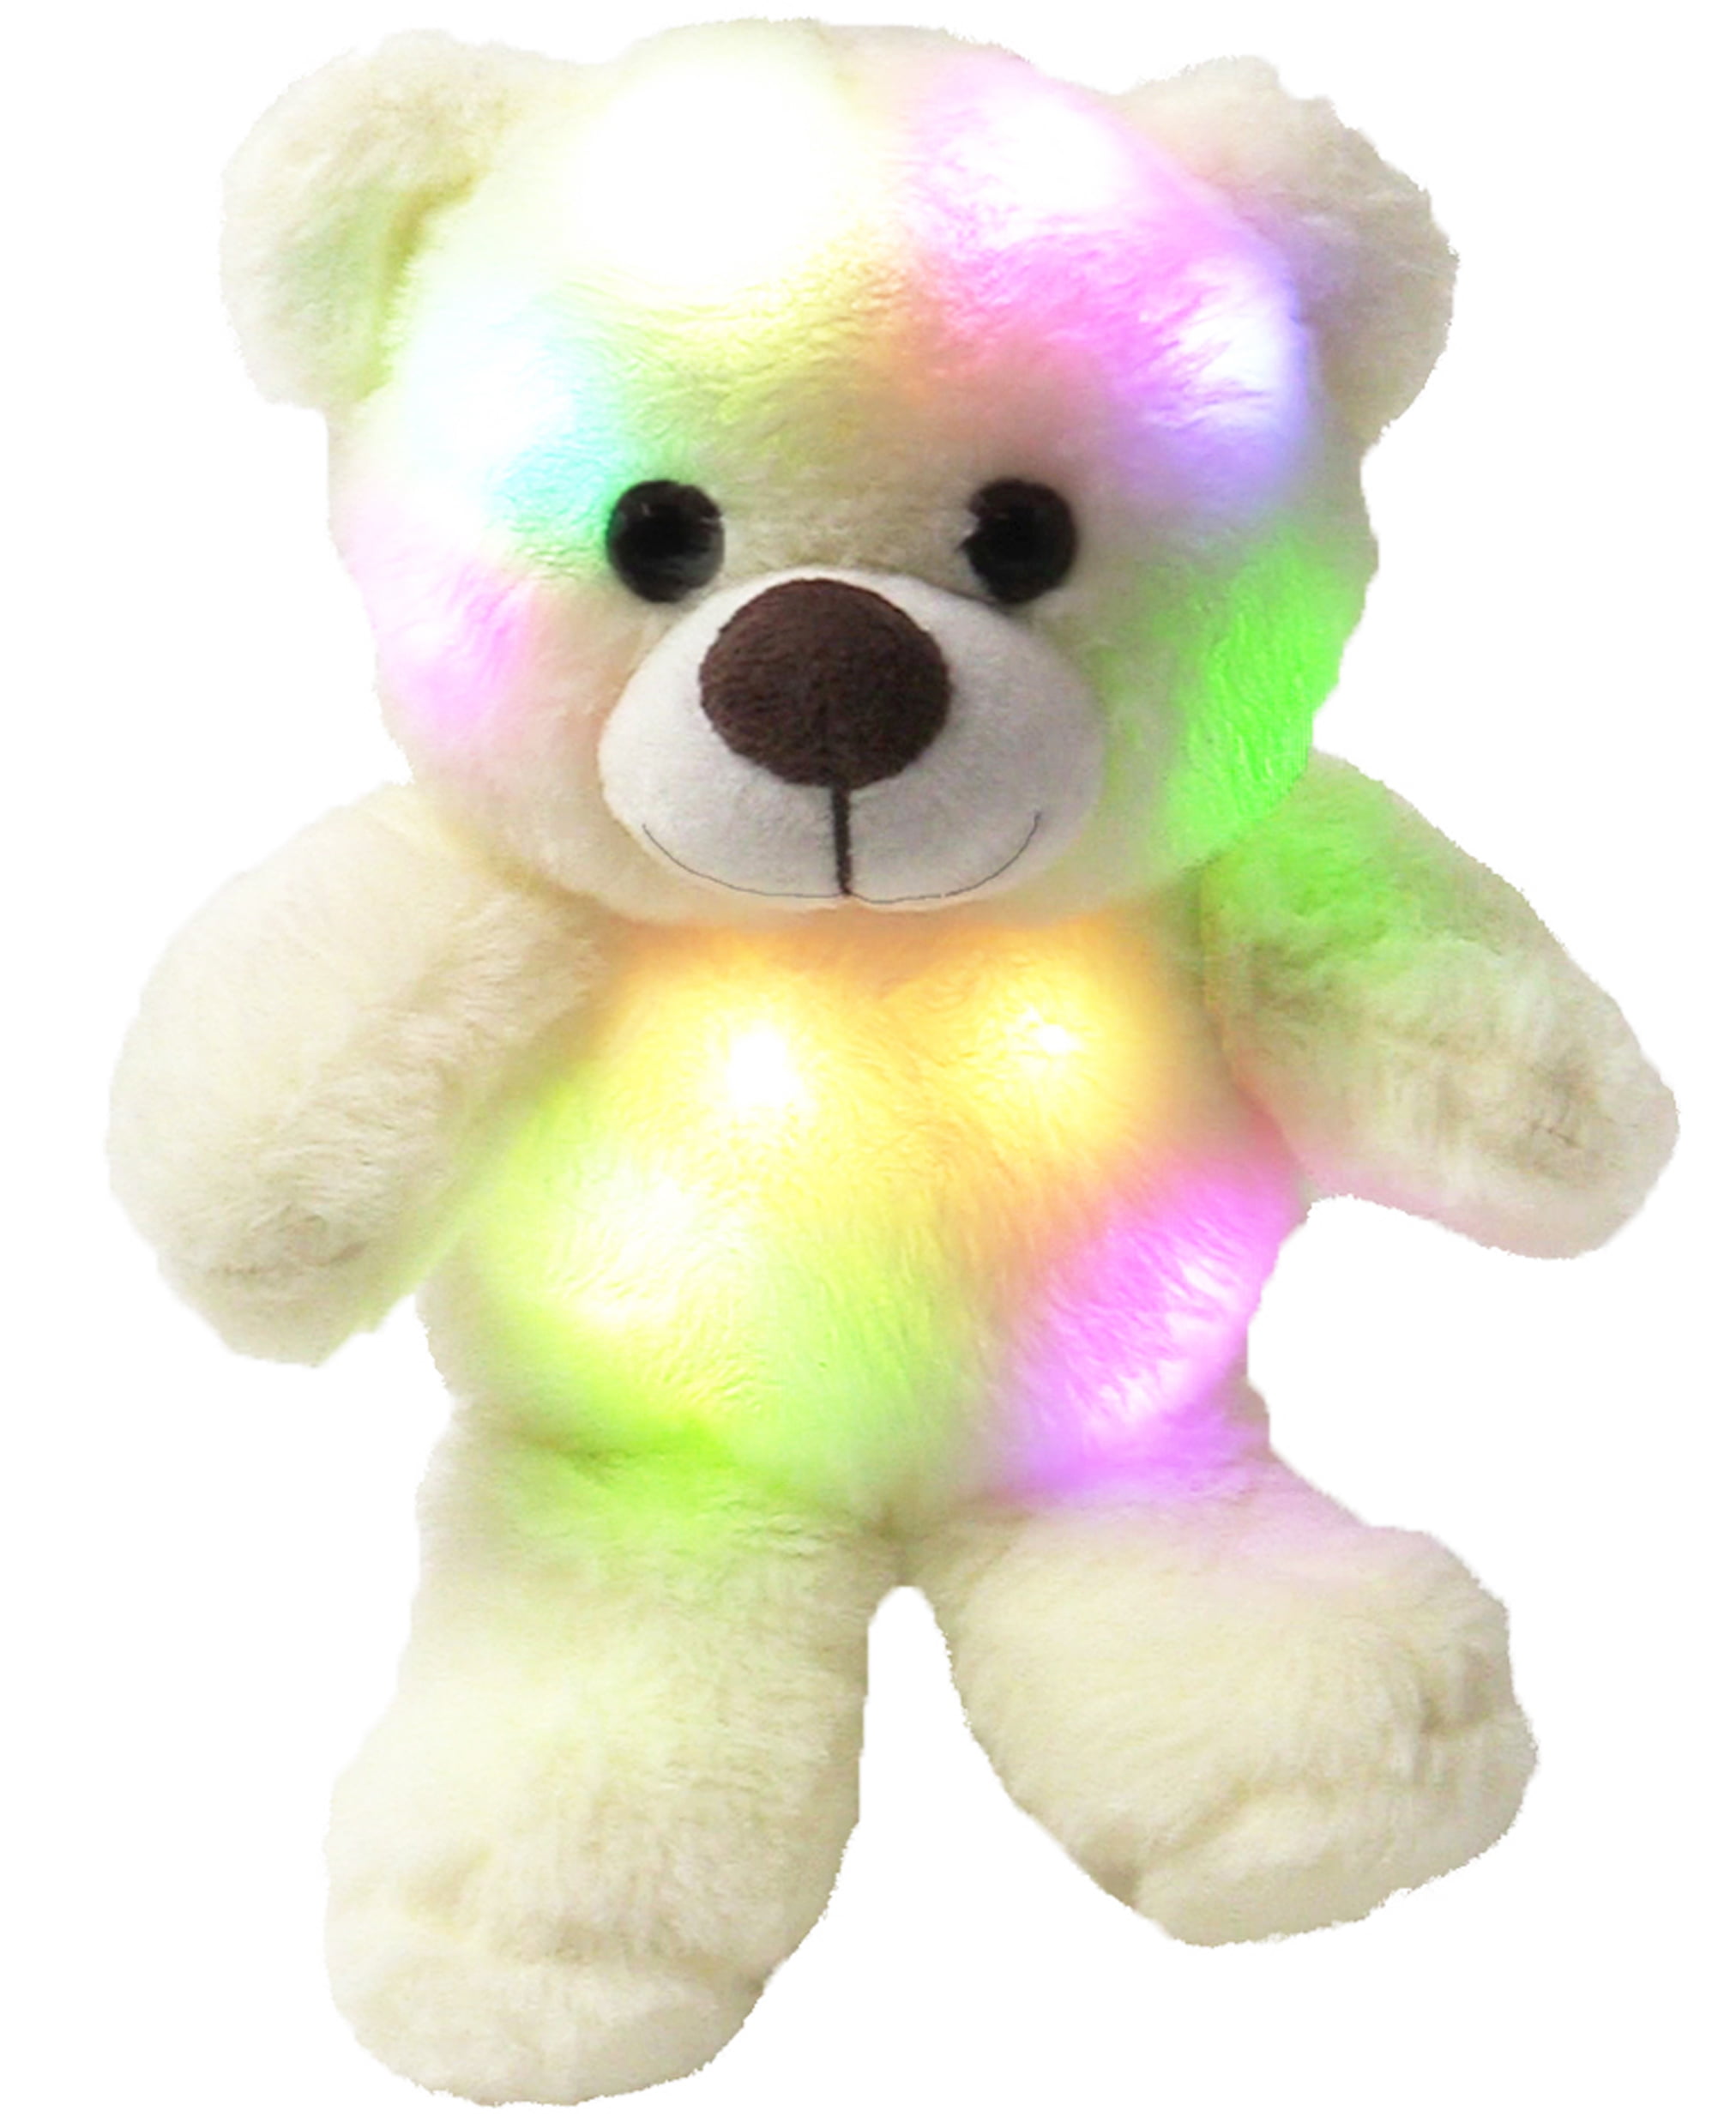 Free Ship US Fuzzy Teddi Bears..1 1/4" hot color bears..Gift Tops or...12 Asst 